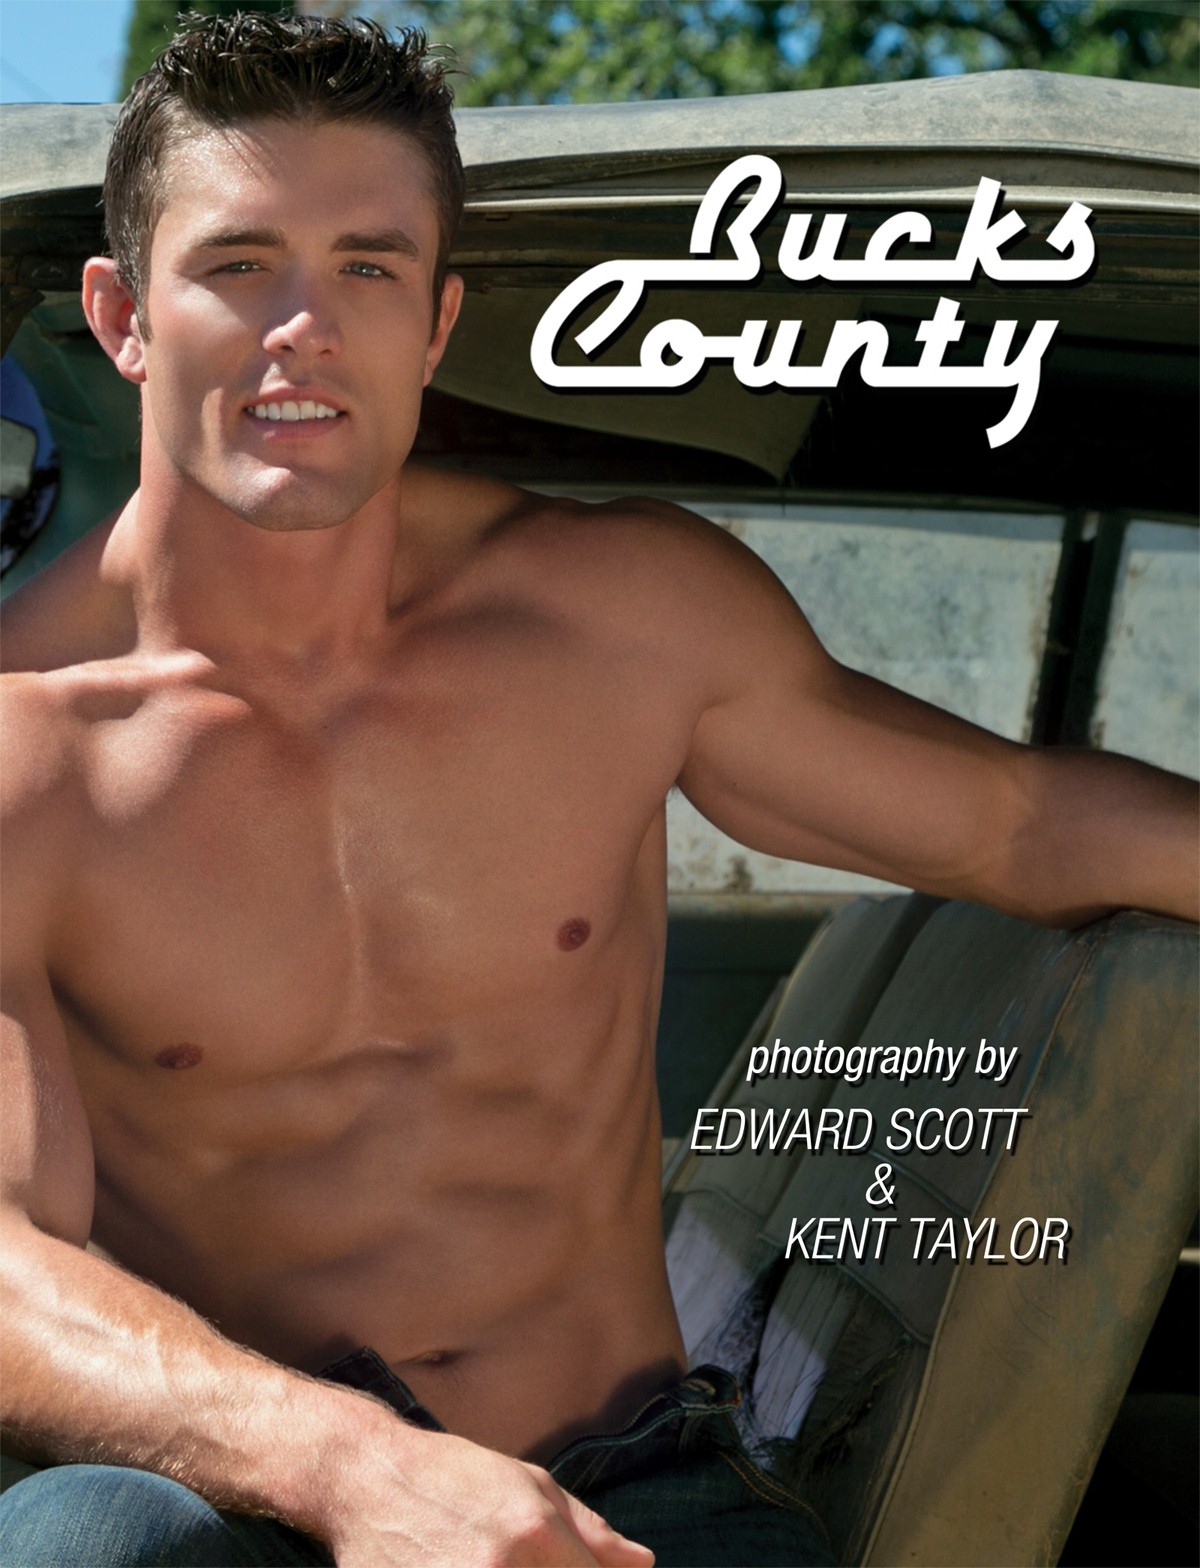 Bucks County Cover